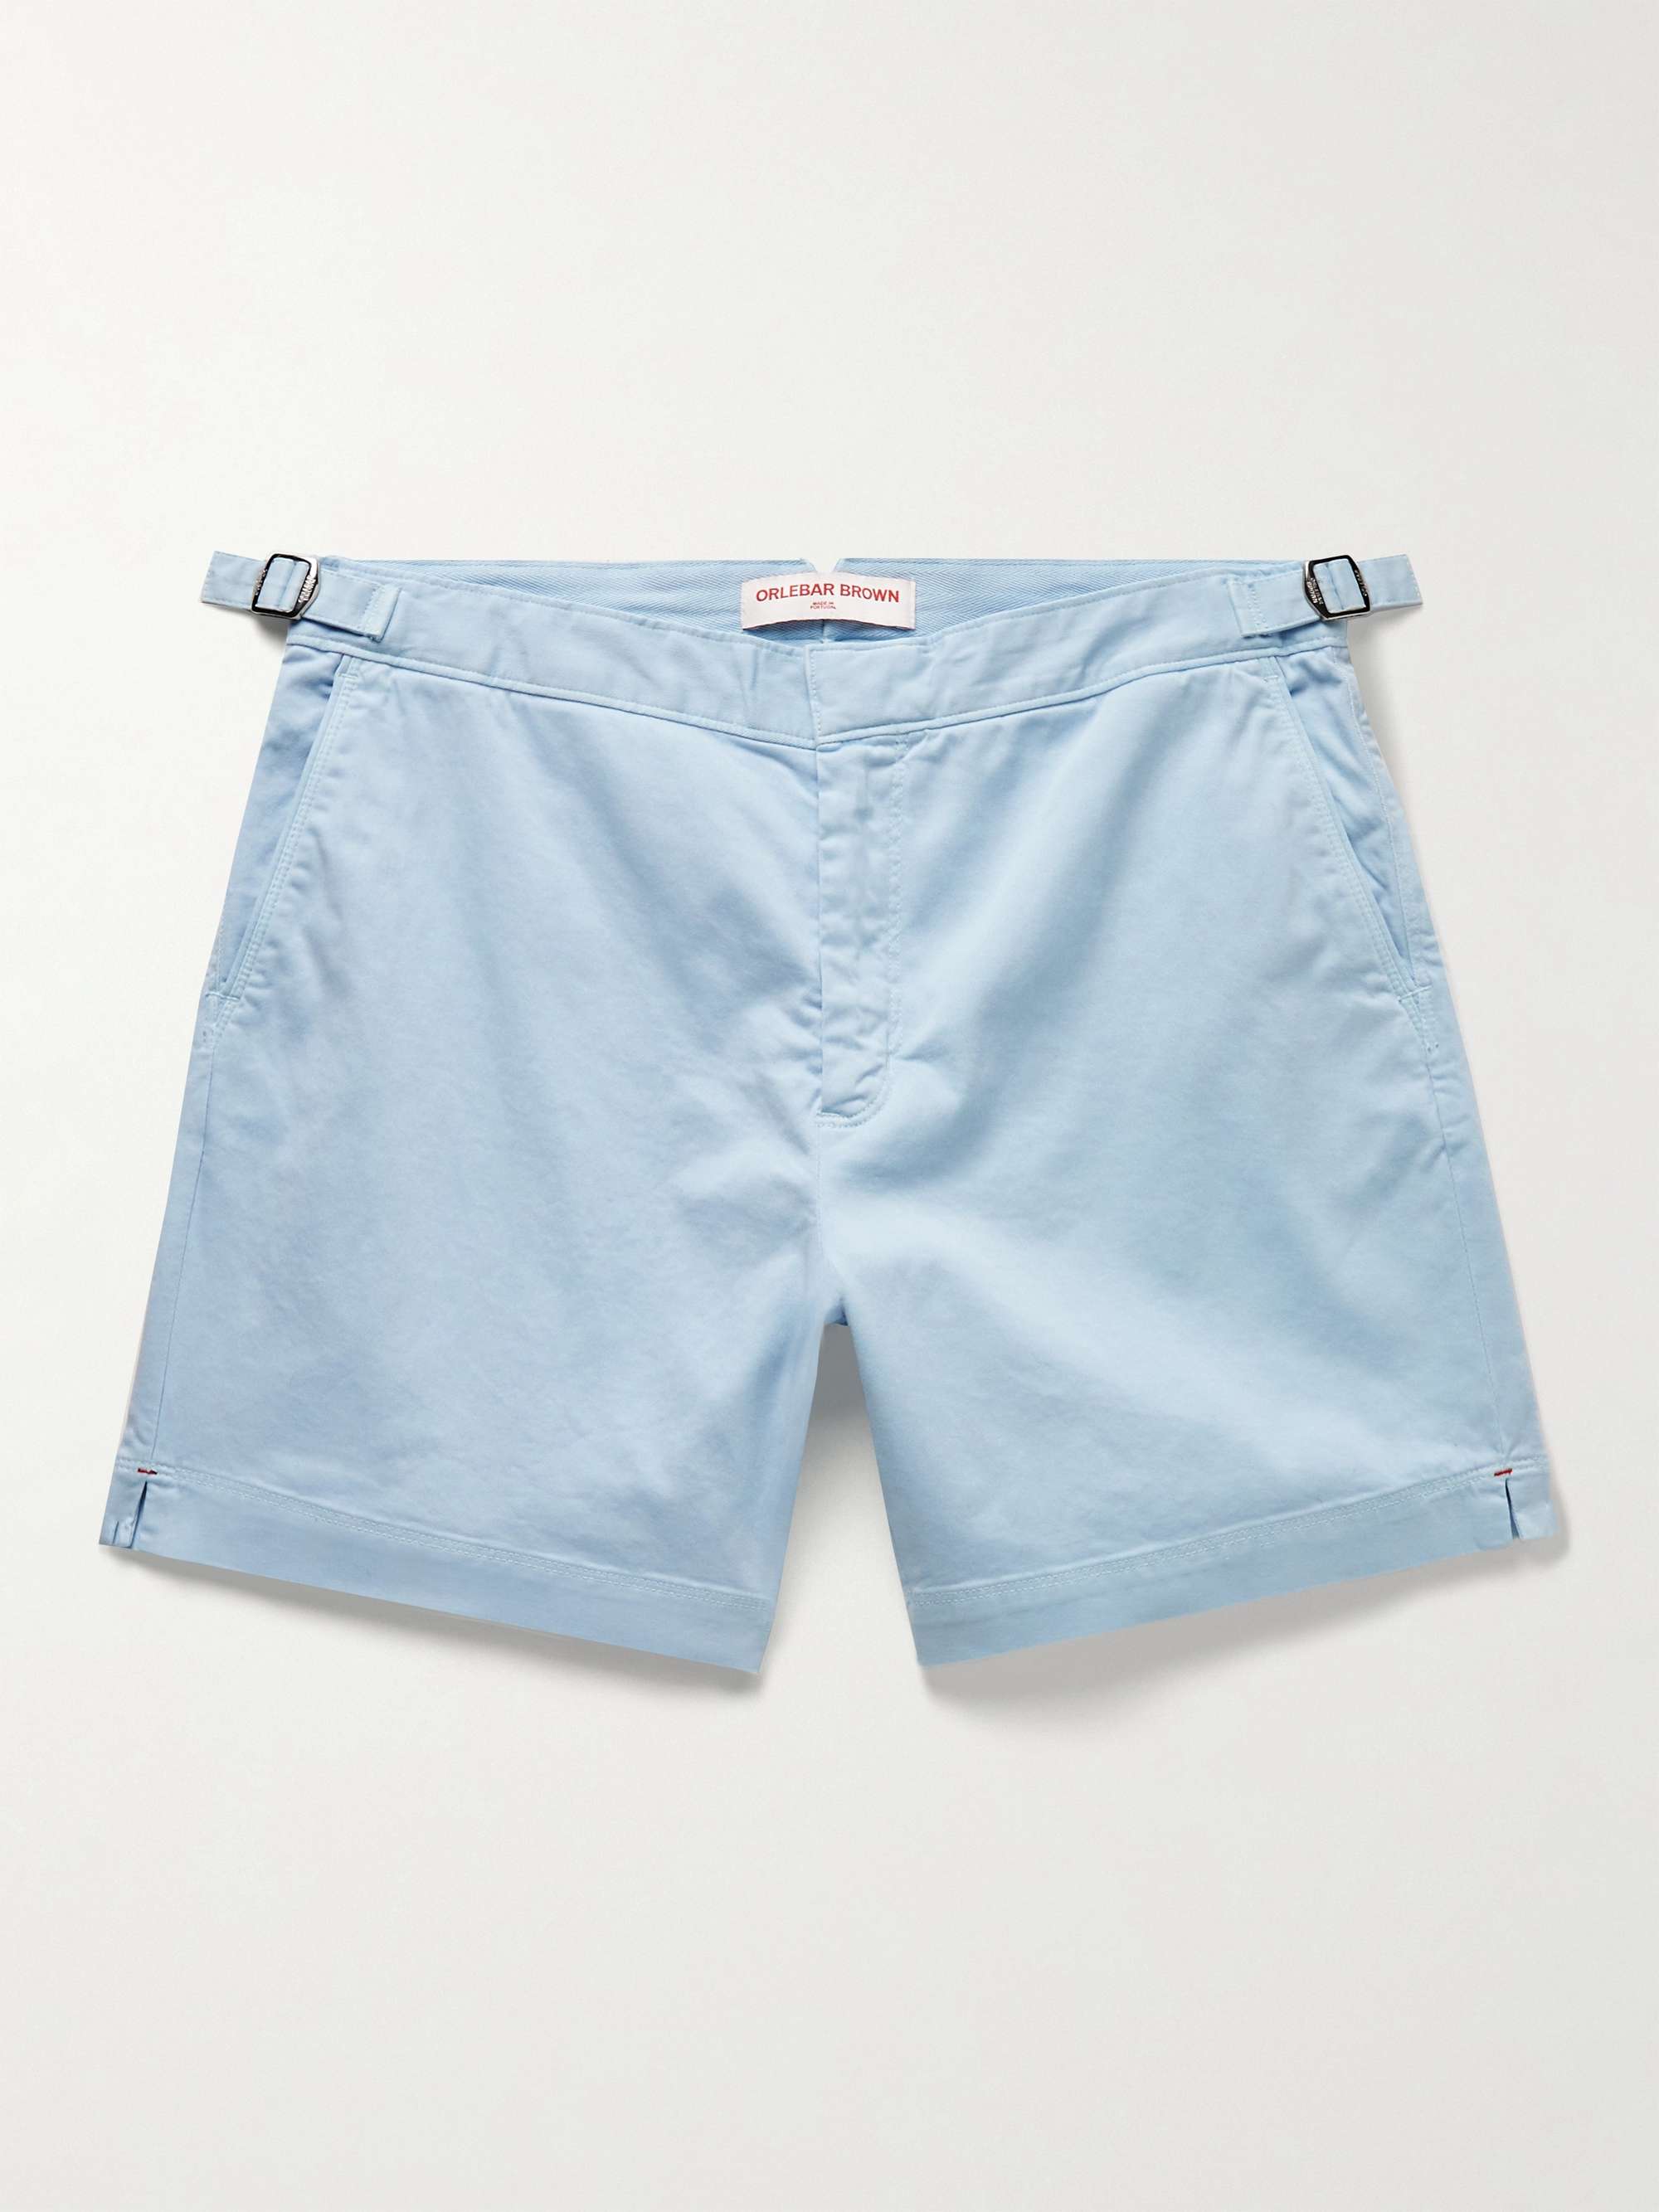 ORLEBAR BROWN Bulldog Slim-Fit Cotton-Blend Twill Shorts for Men | MR ...